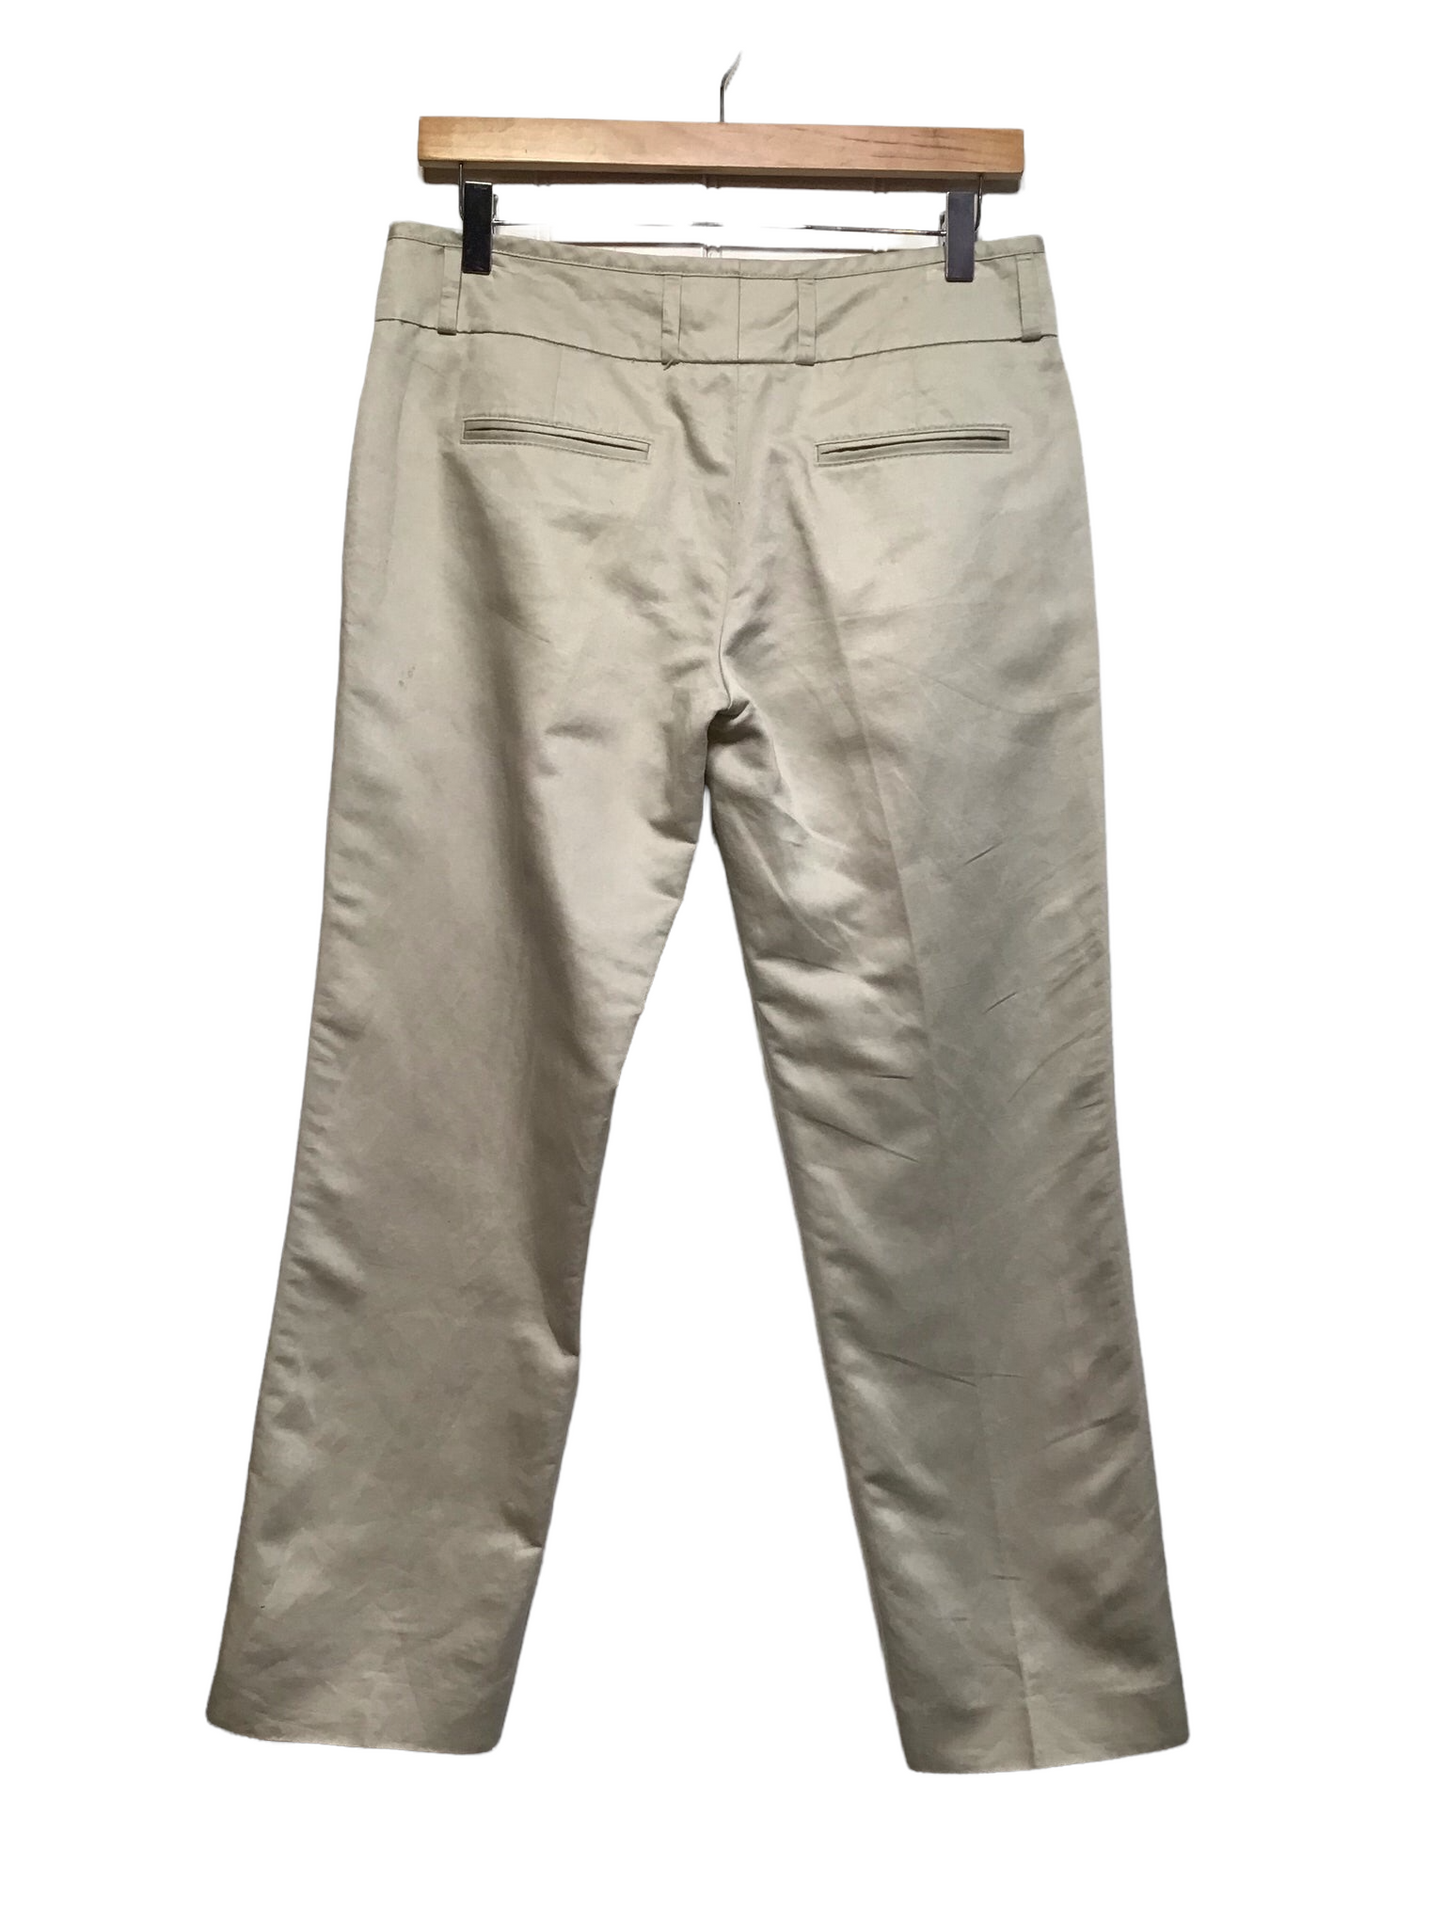 Hugo Boss Suit Trousers (Size M)